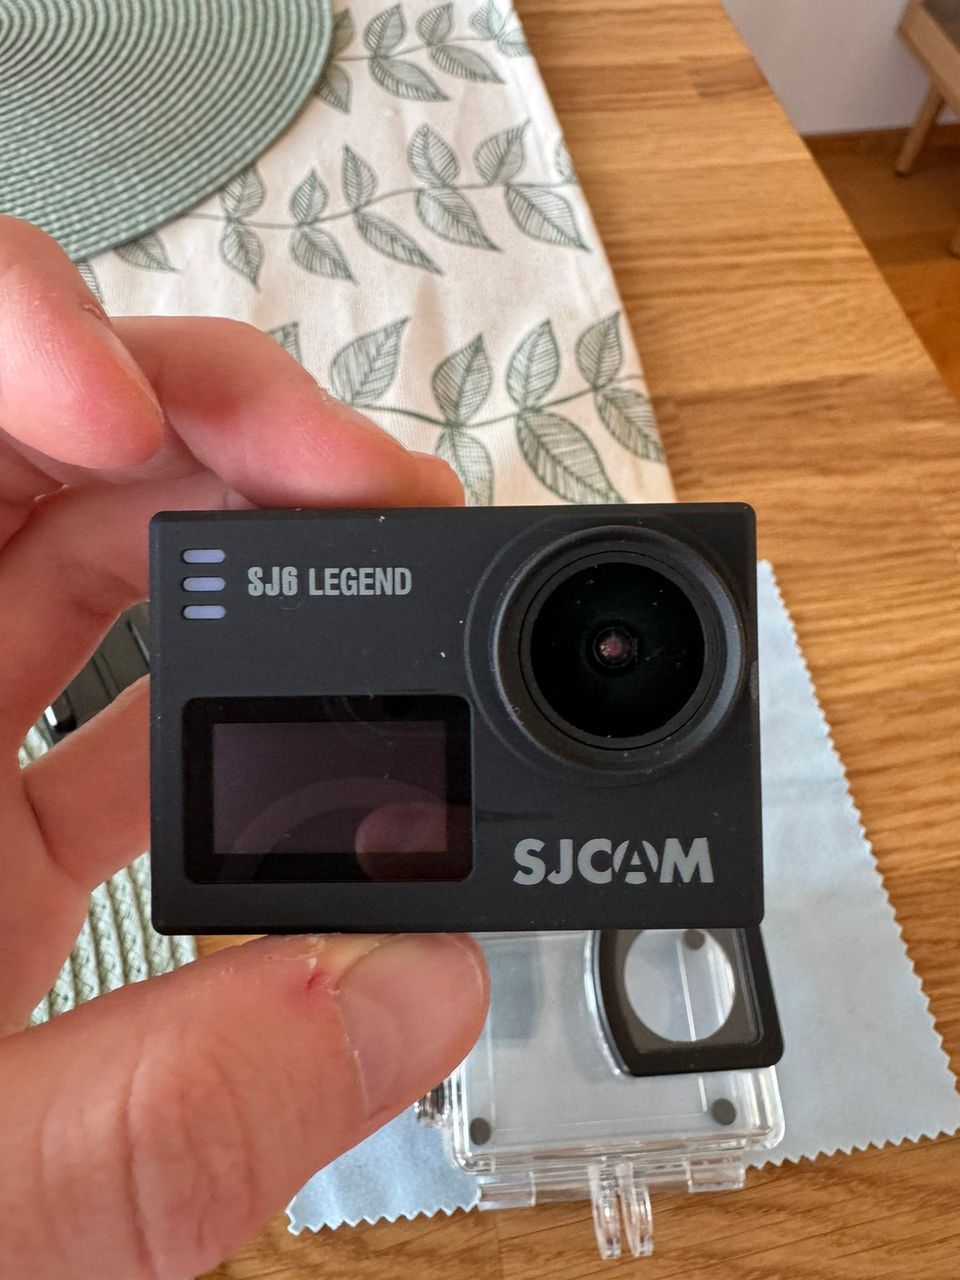 SJCAM SJ6 Legend action camera with many accessories